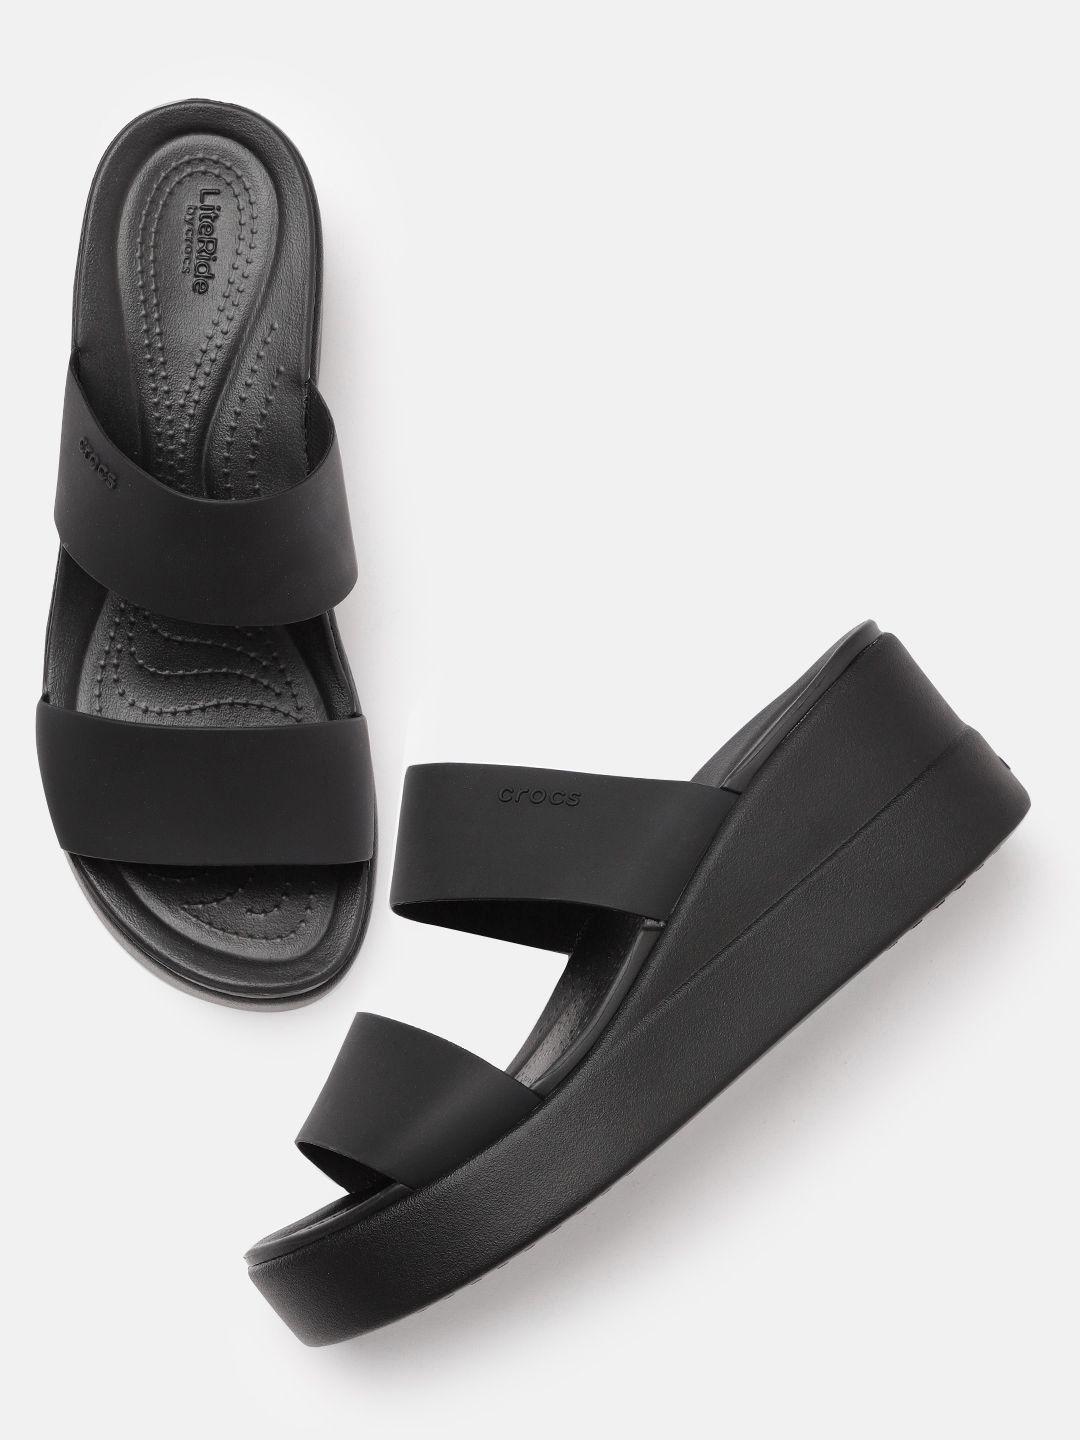 crocs-black-brooklyn-wedge-sandals